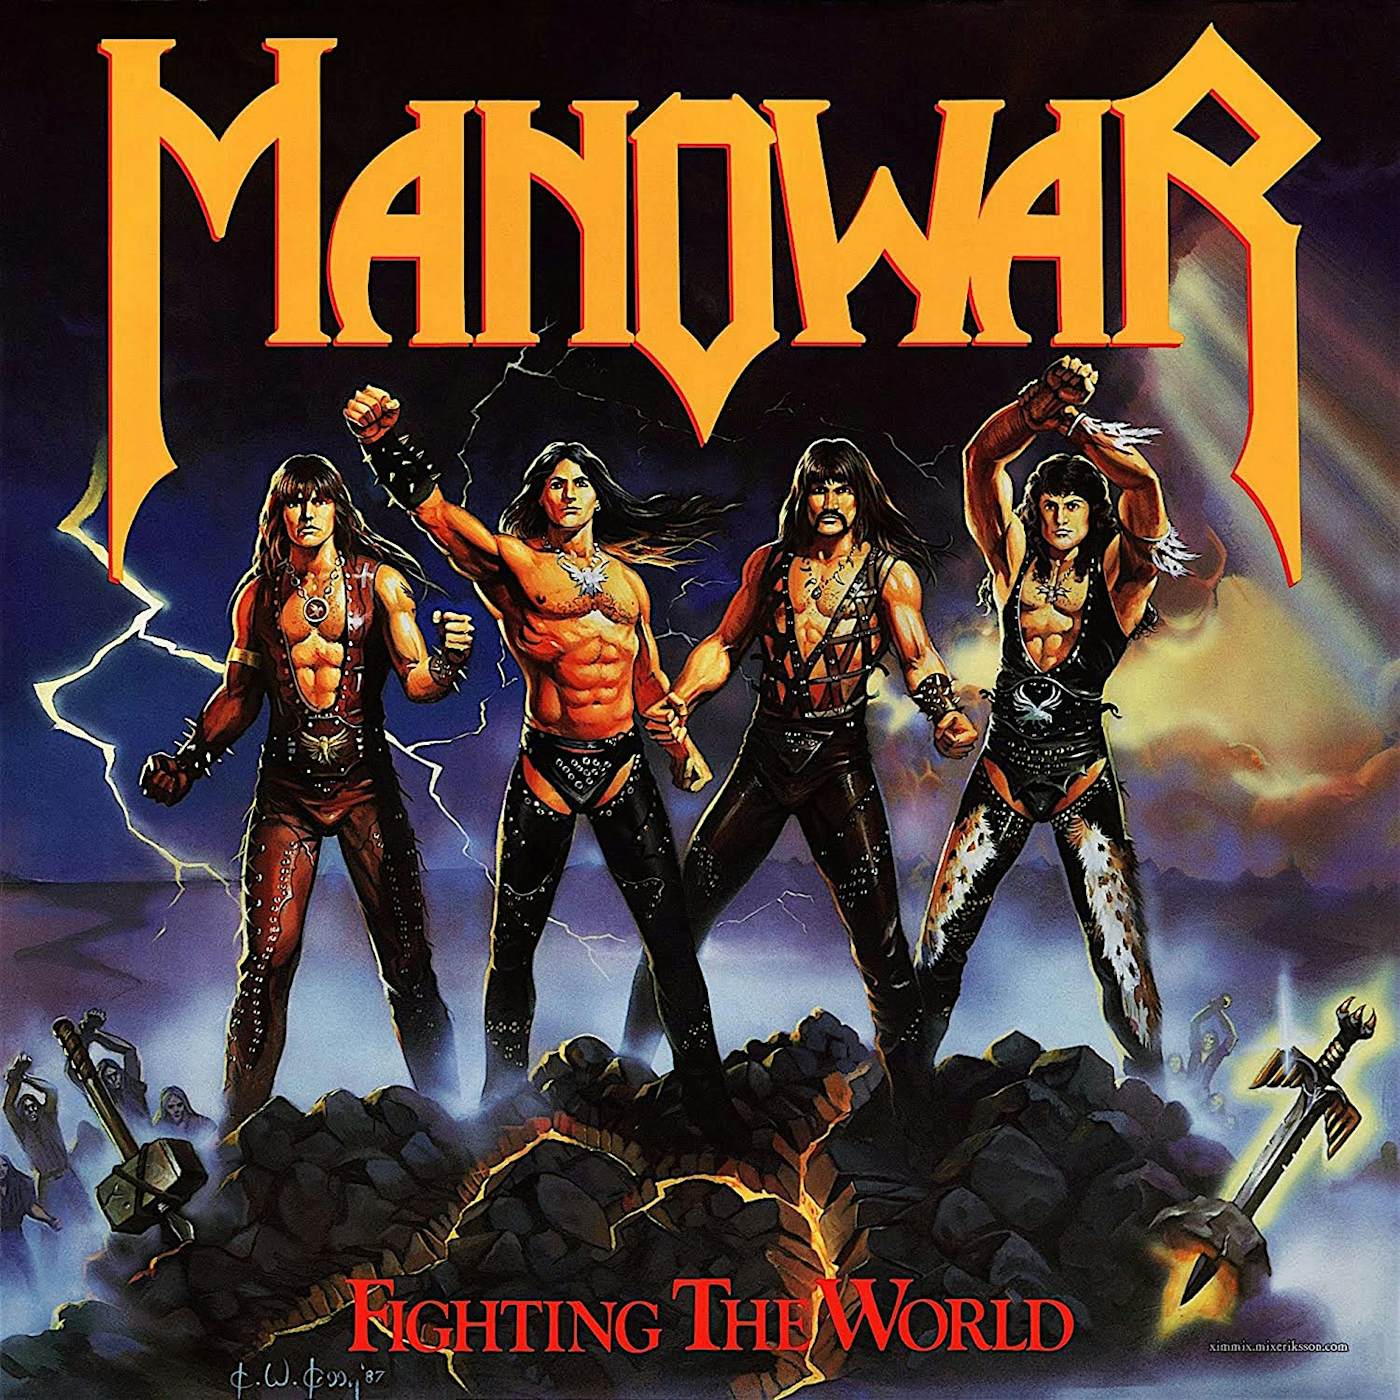 Manowar Fighting The World Vinyl Record